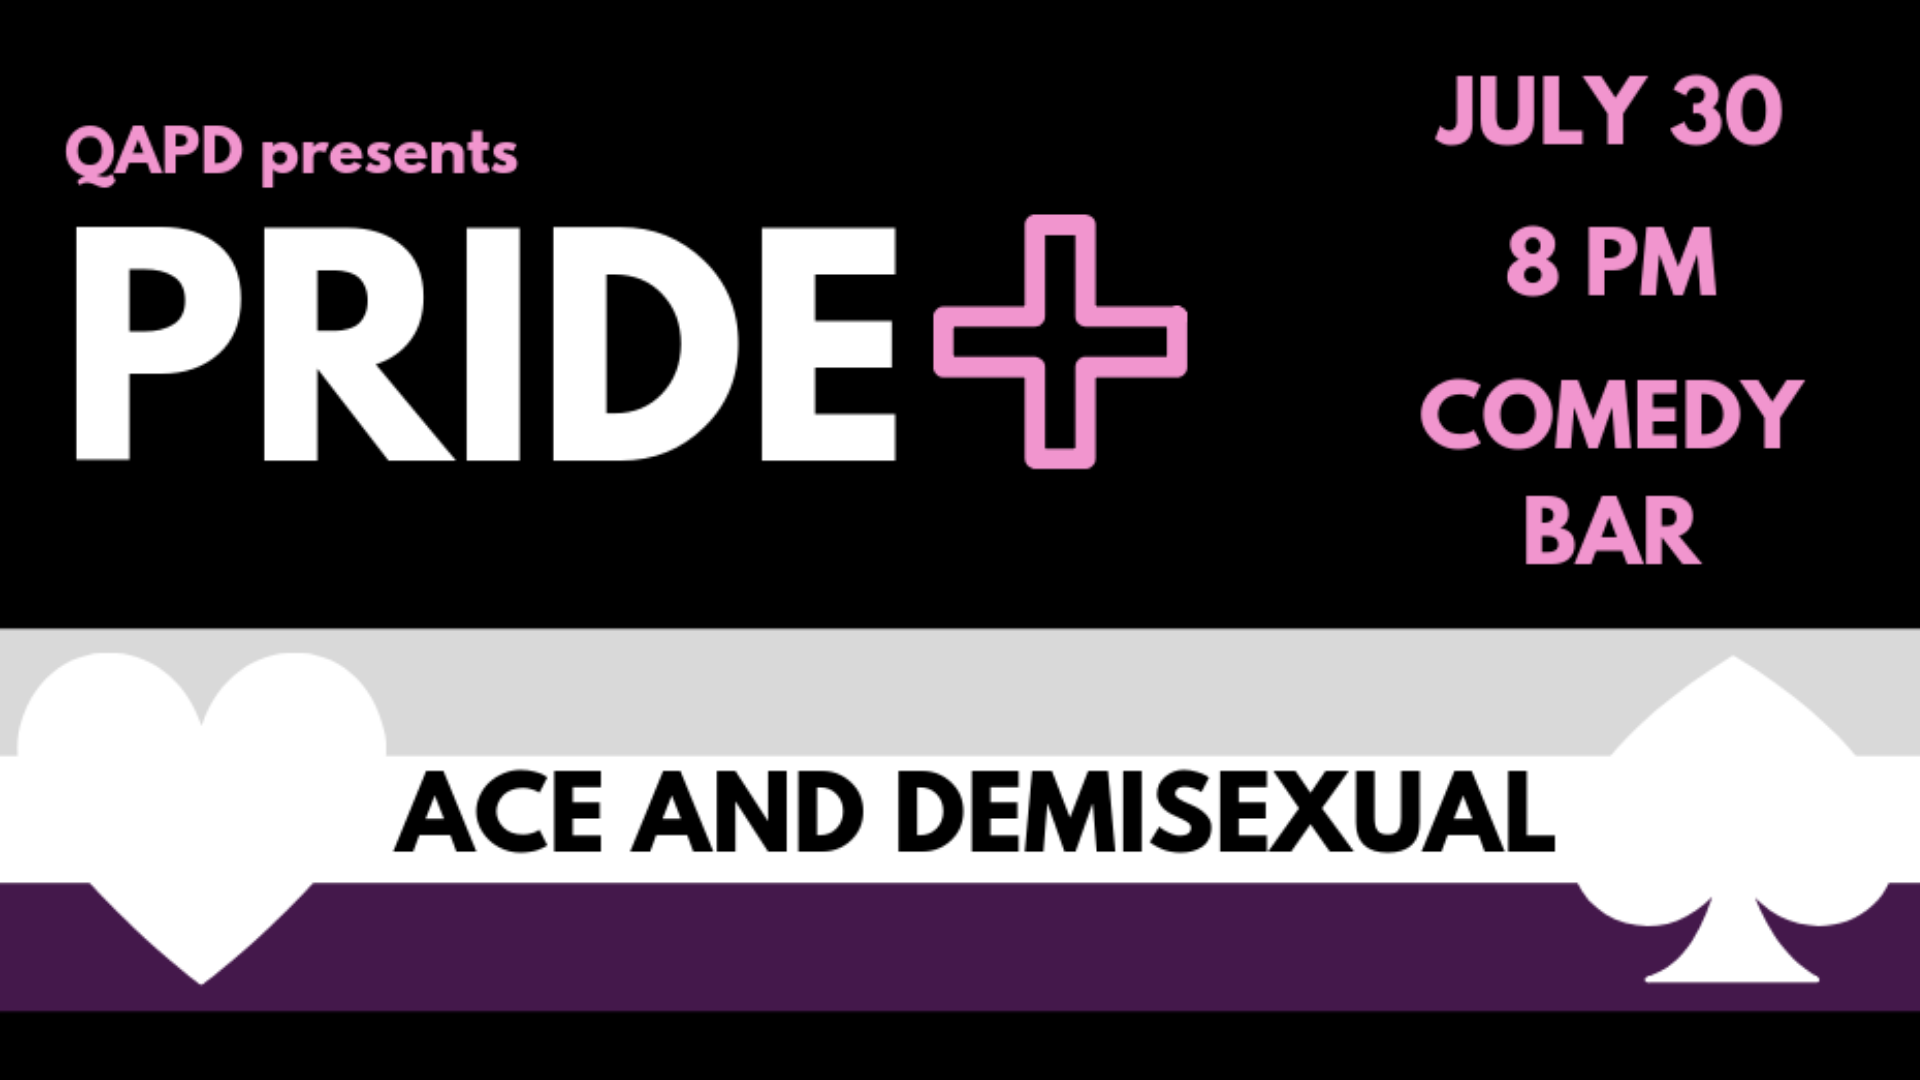 QueerEvents.ca - Toronto Event Listing - QAPD - Ace & Demi comdey show